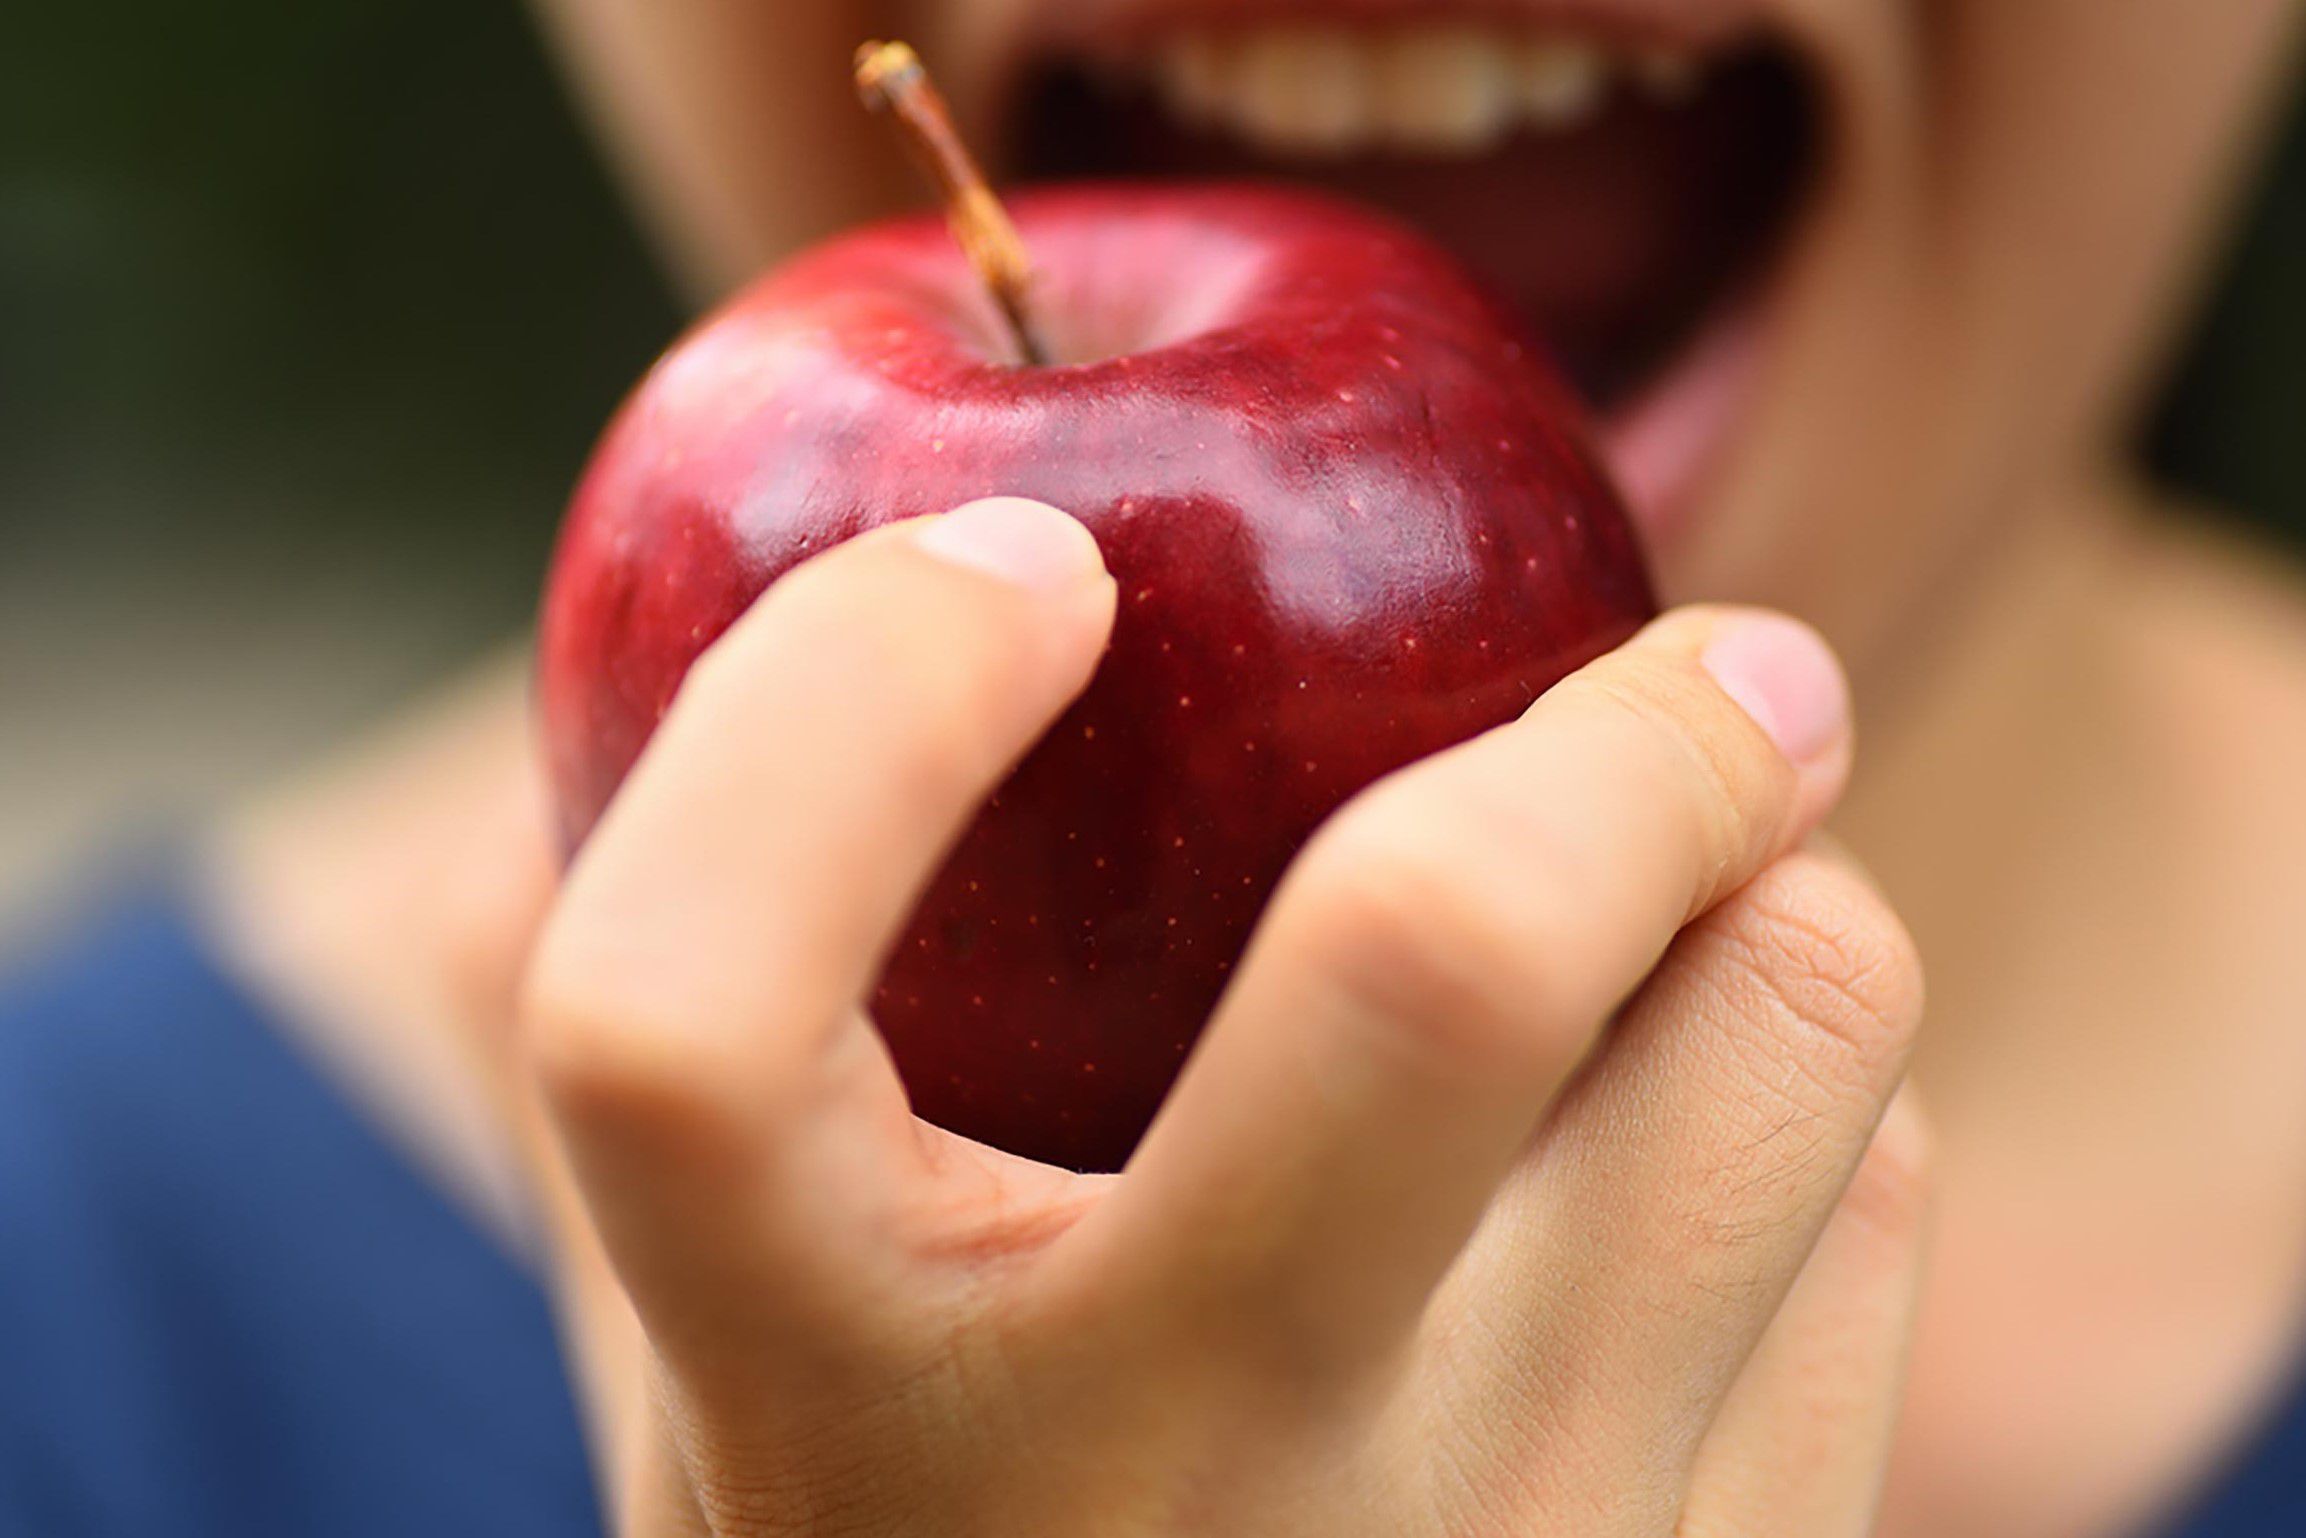 Unenäo tõlgendamine õunte söömisest